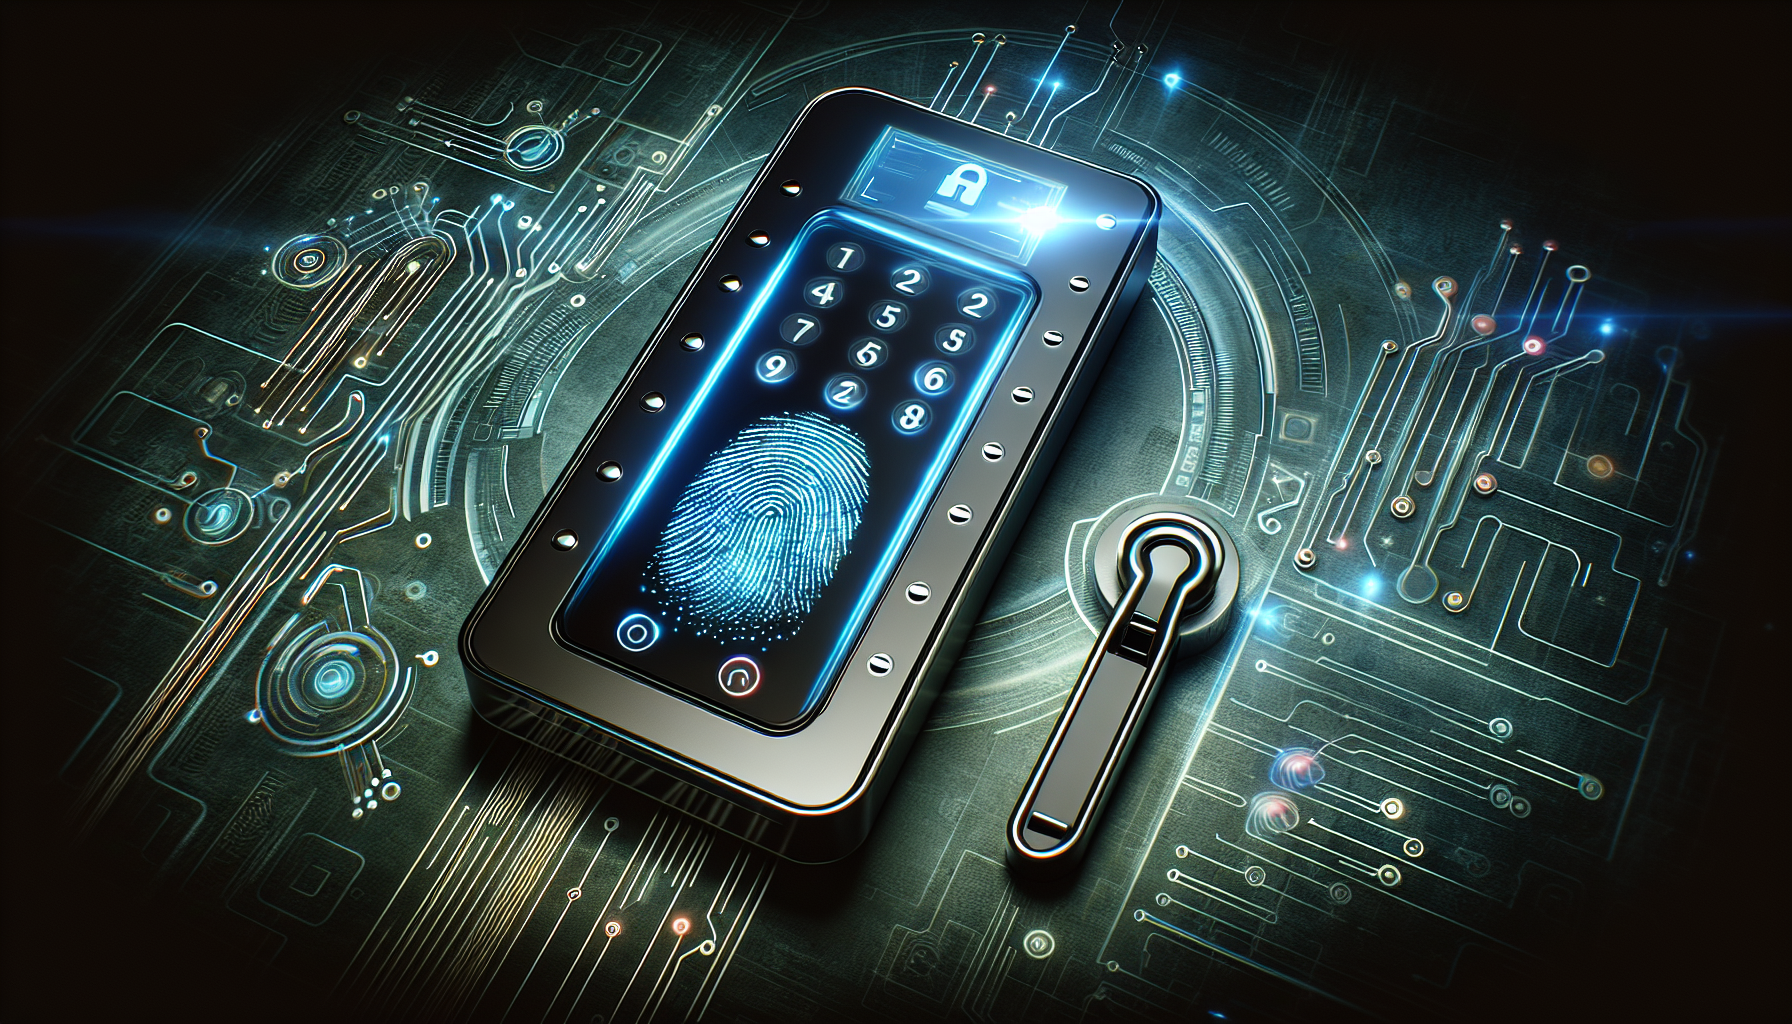 Illustration of advanced security technologies for keypad locks